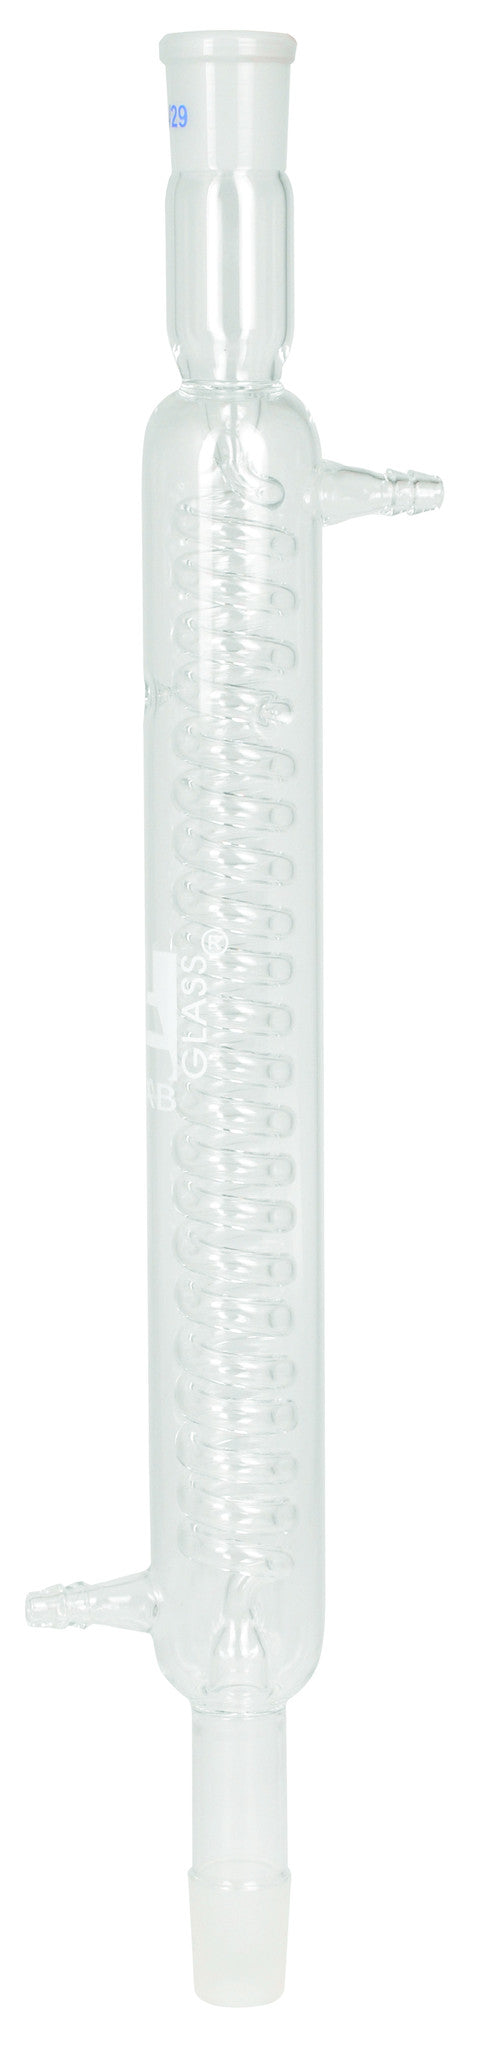 Condenser - Graham, Socket size 29/32 & Cone size 29/32, Effective length 40cm.